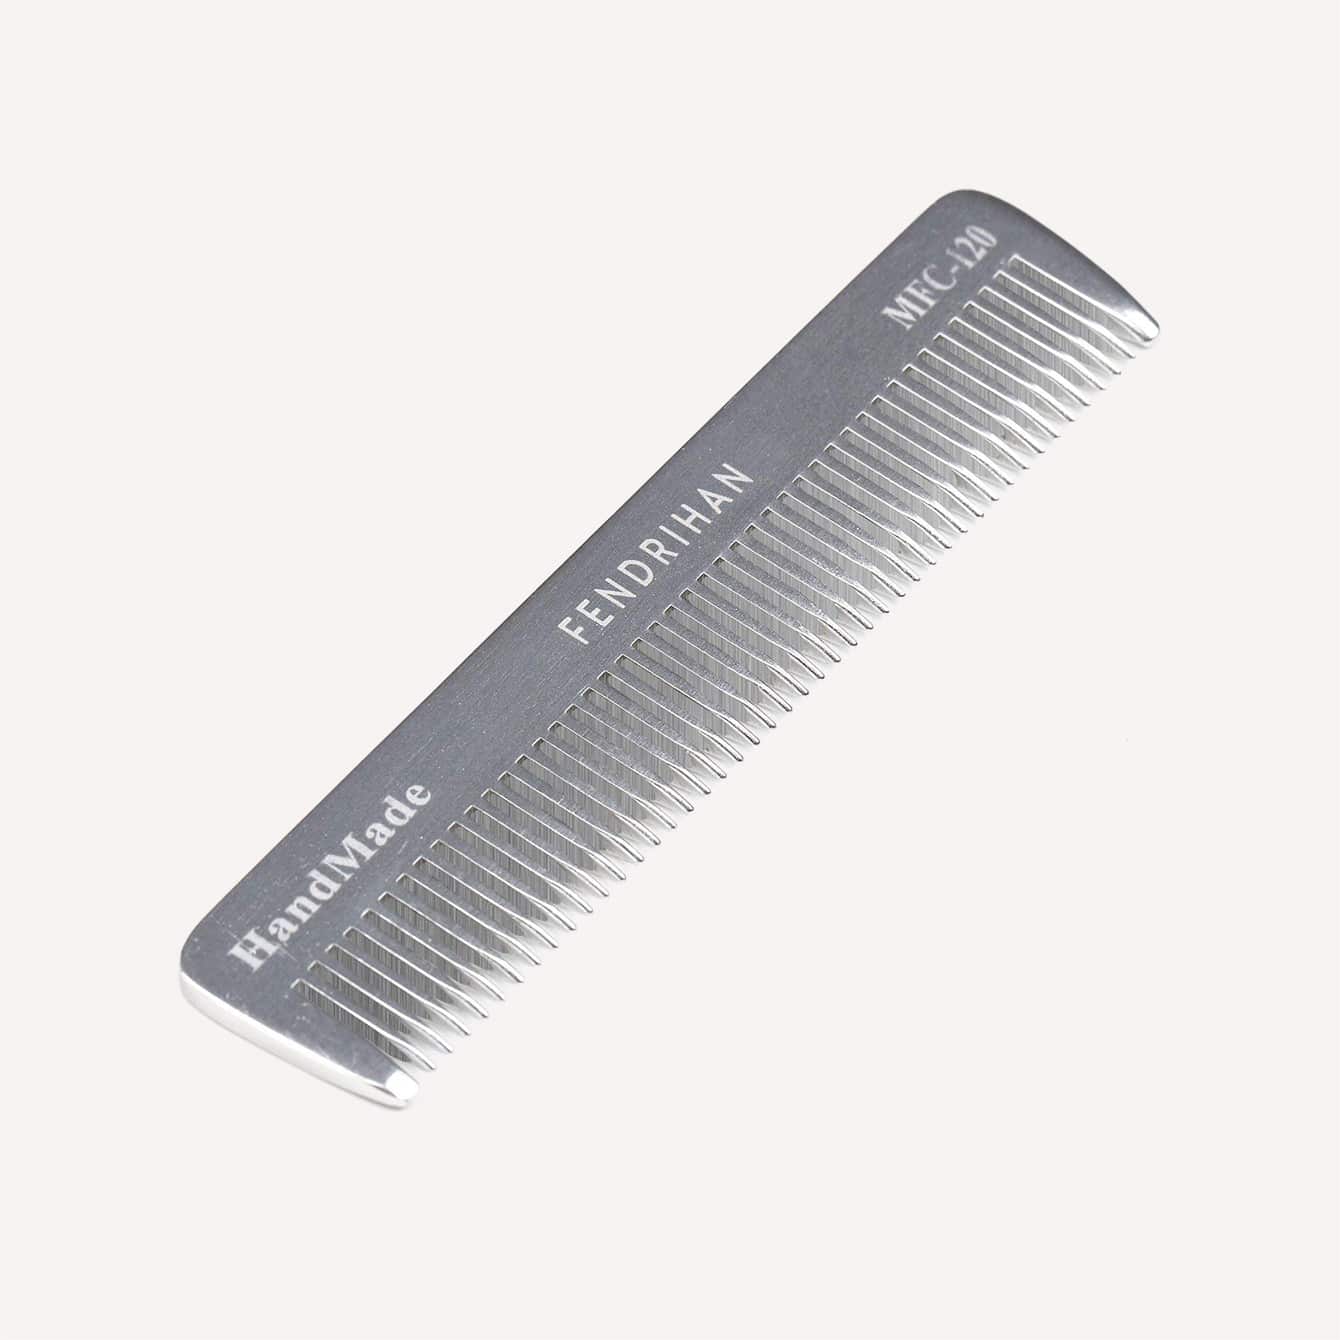 Fendrihan Small 4.6 Pocket Grooming Comb